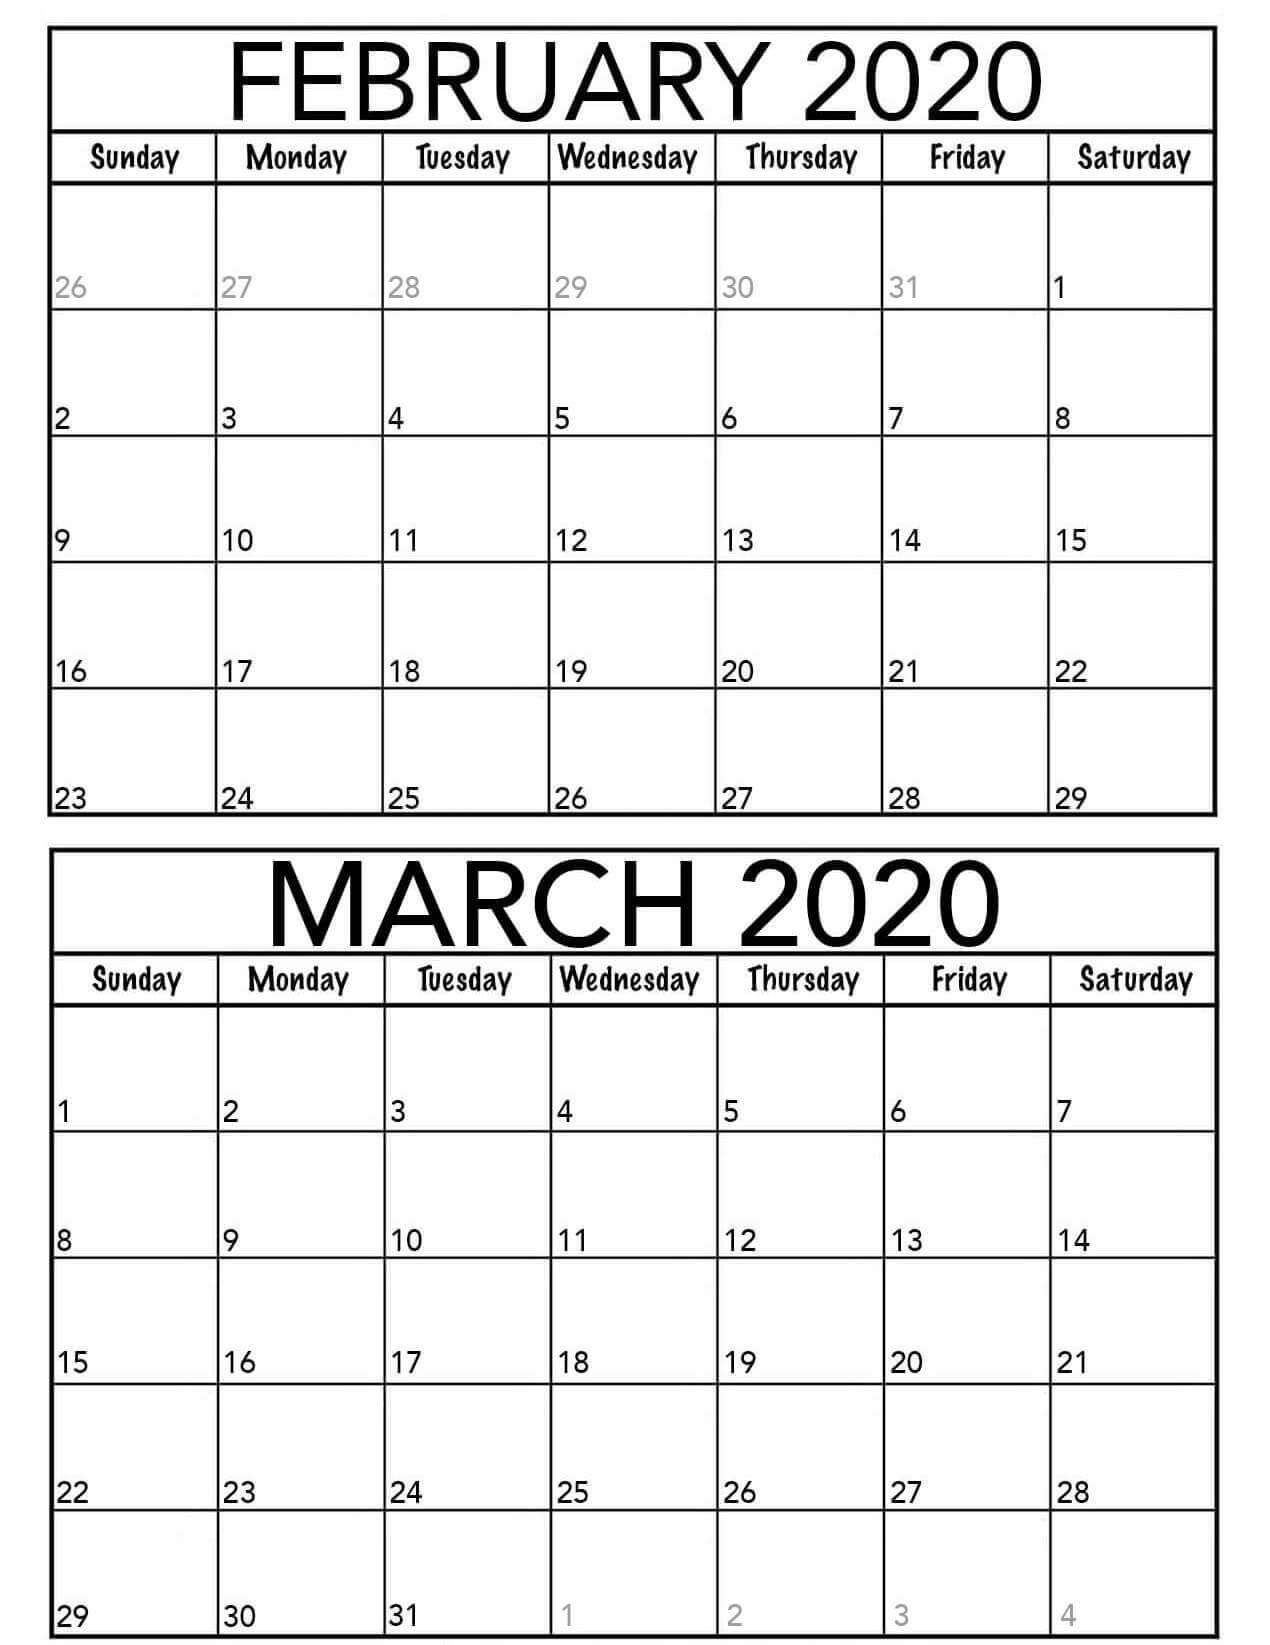 February March 2020 Calendar Template  2019 Calendars For in 2020 Calendar February And March